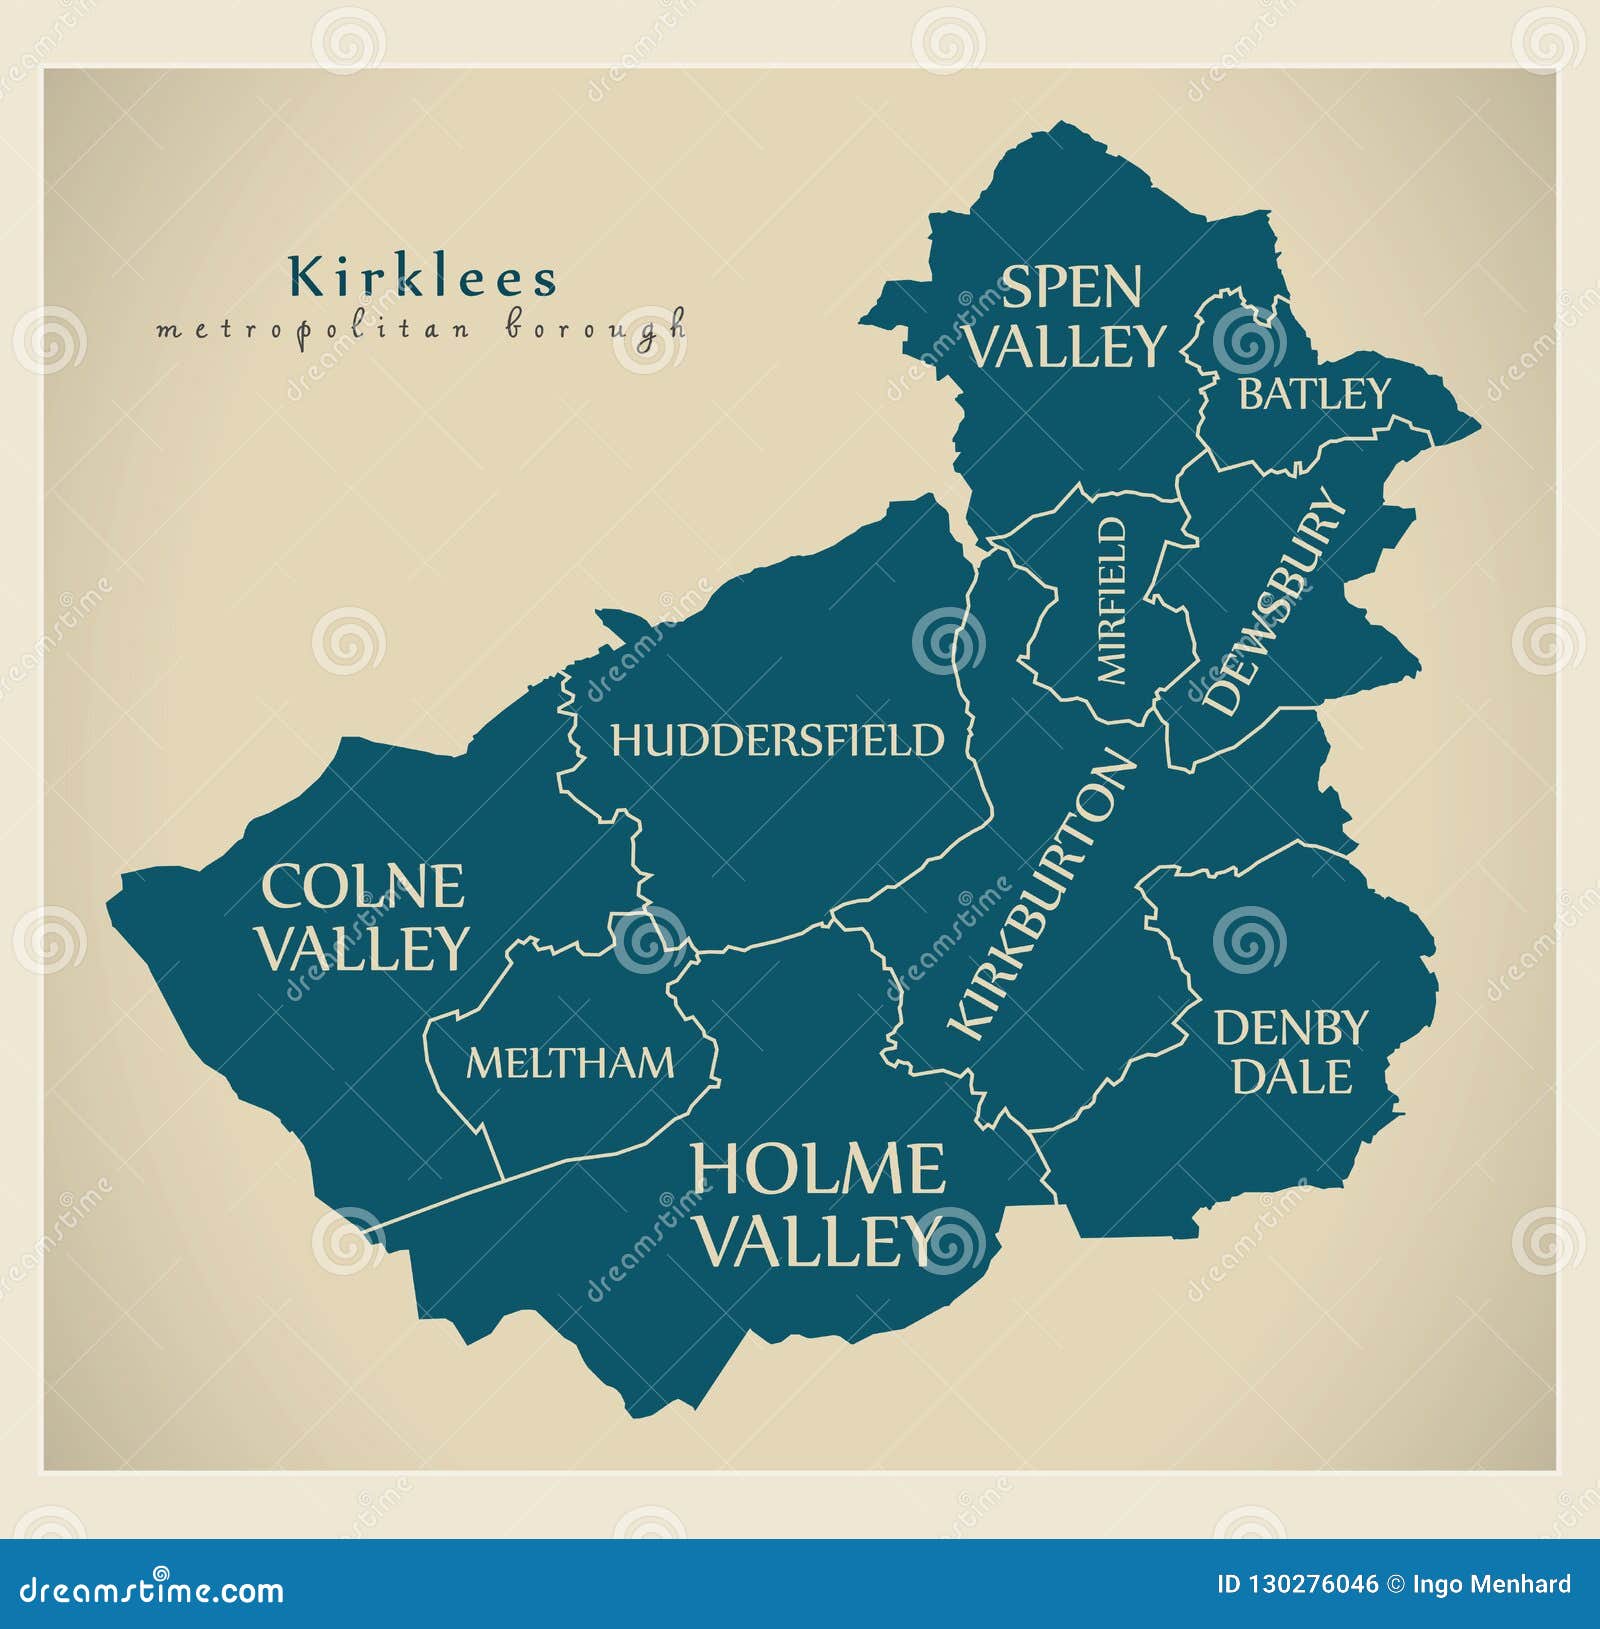 Kirklees Metropolitan Borough Map England UK Labelled Black ...